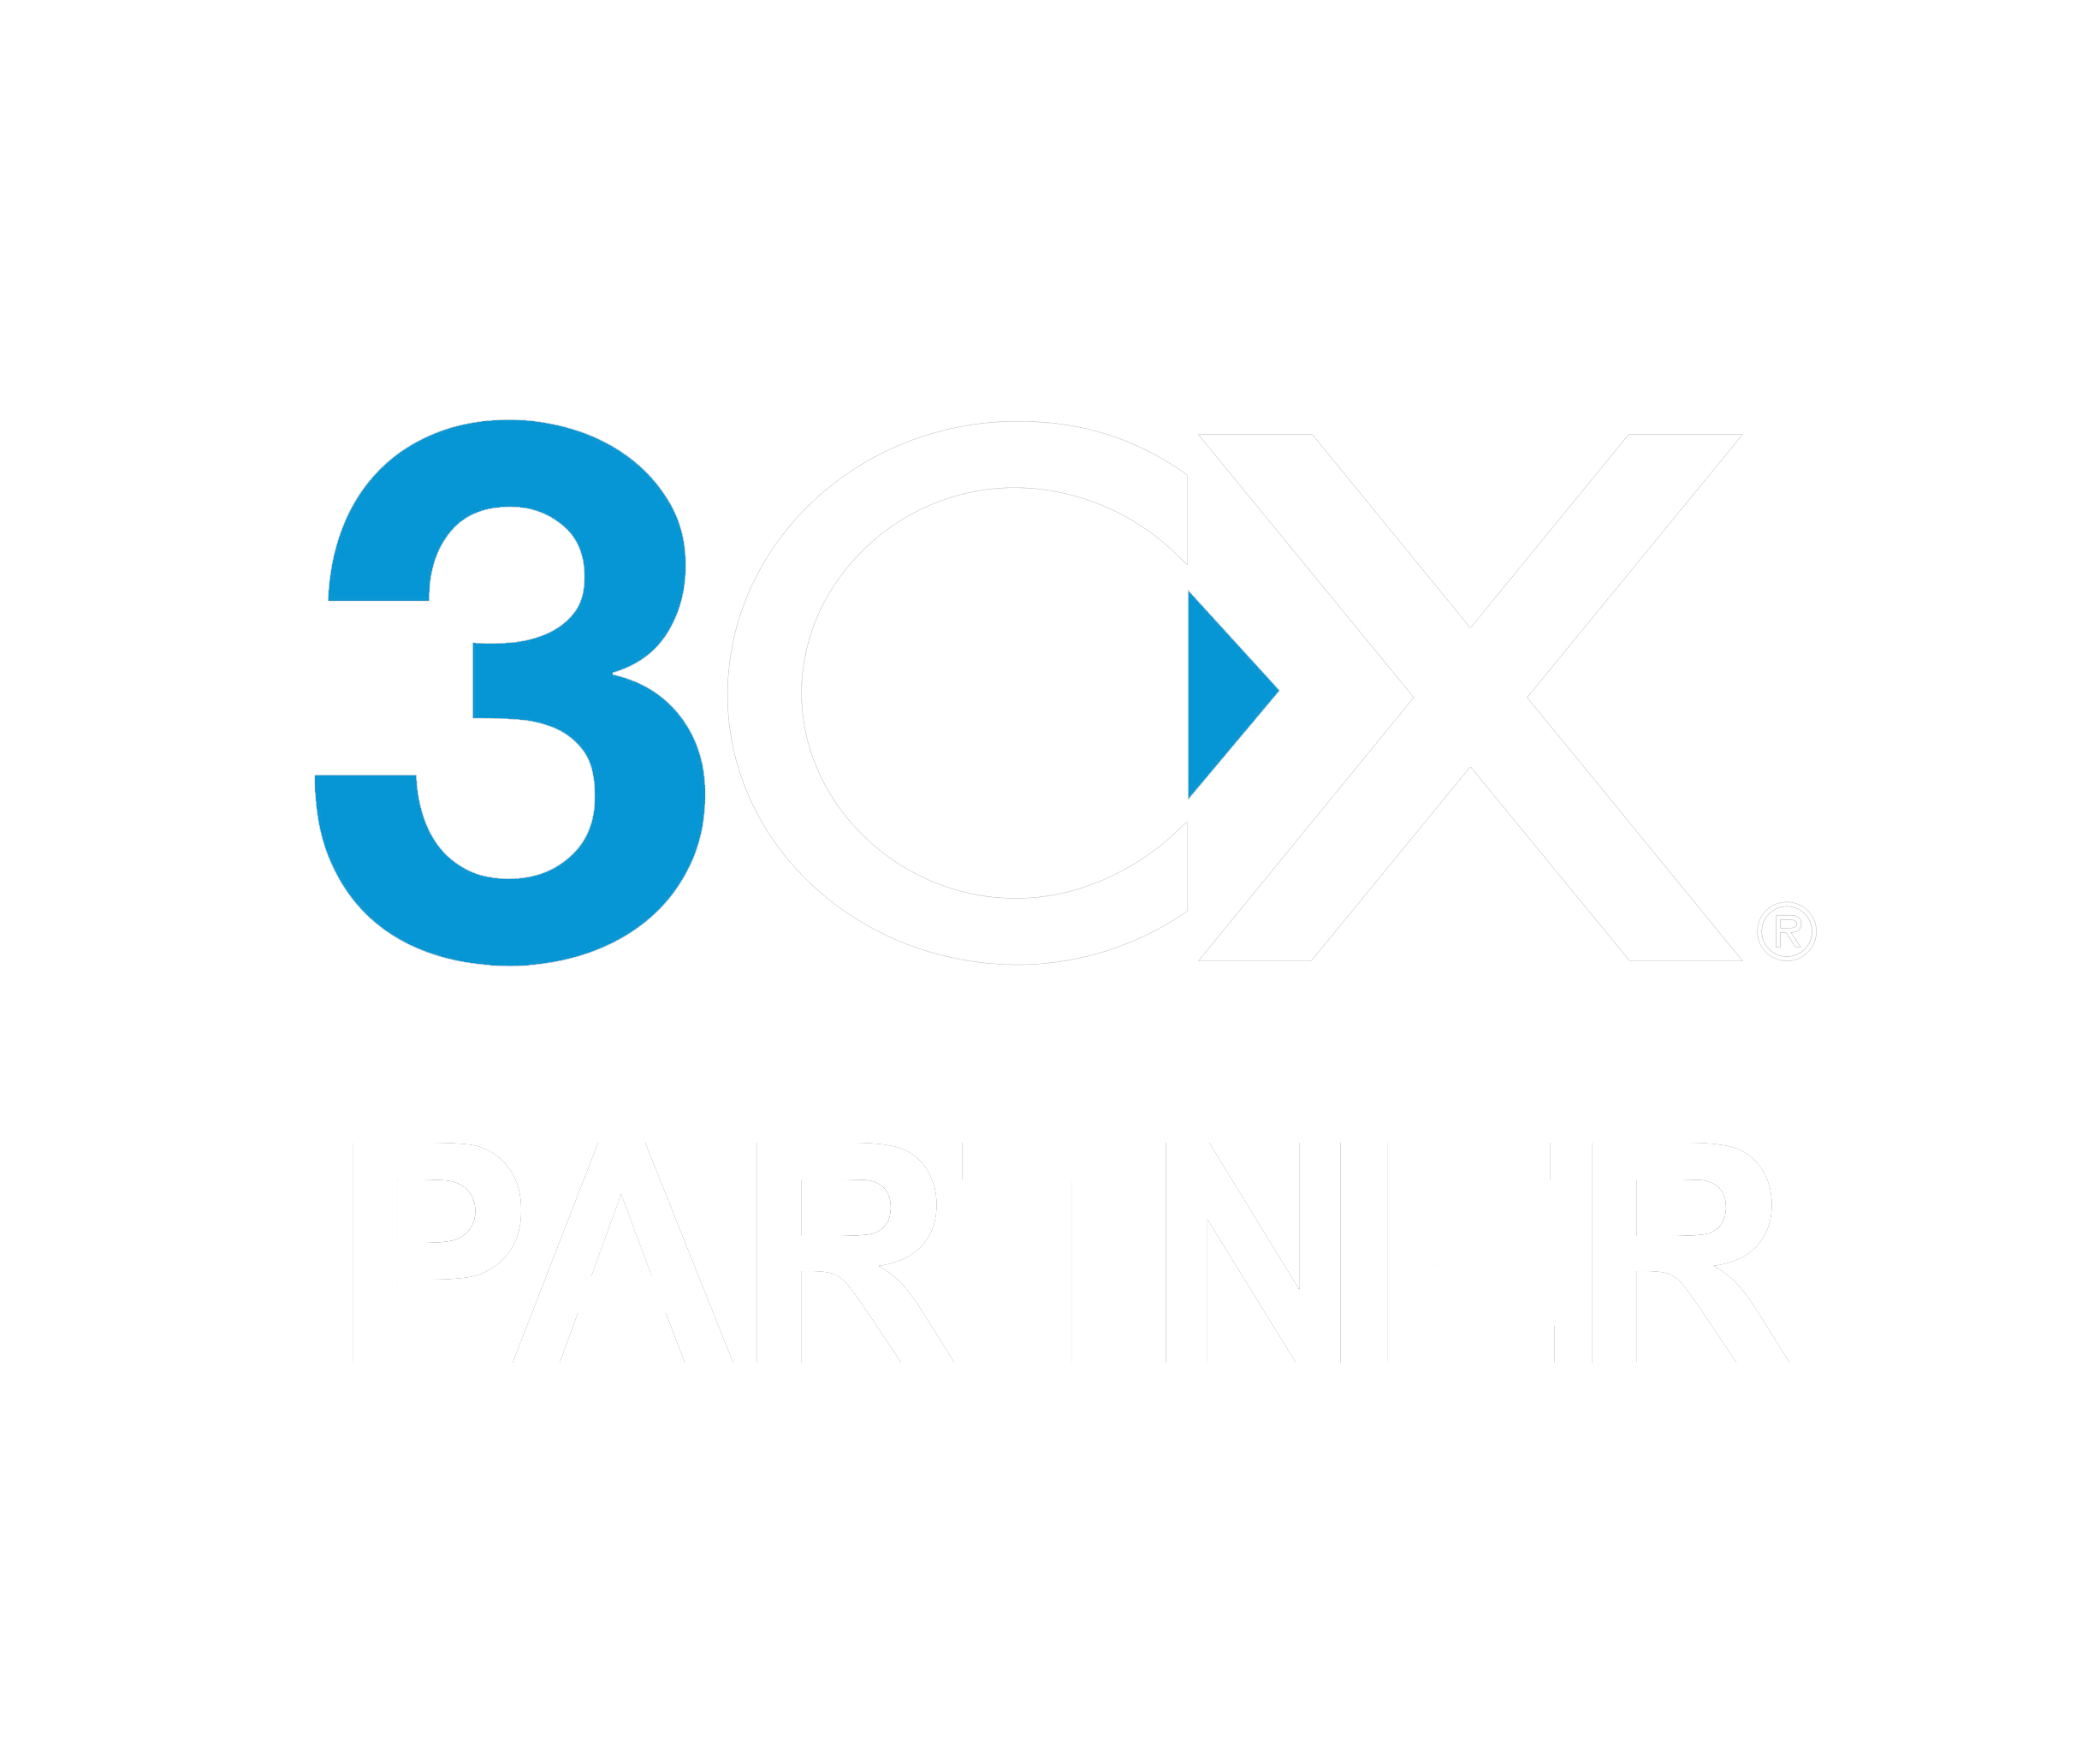 3CX Partner logo